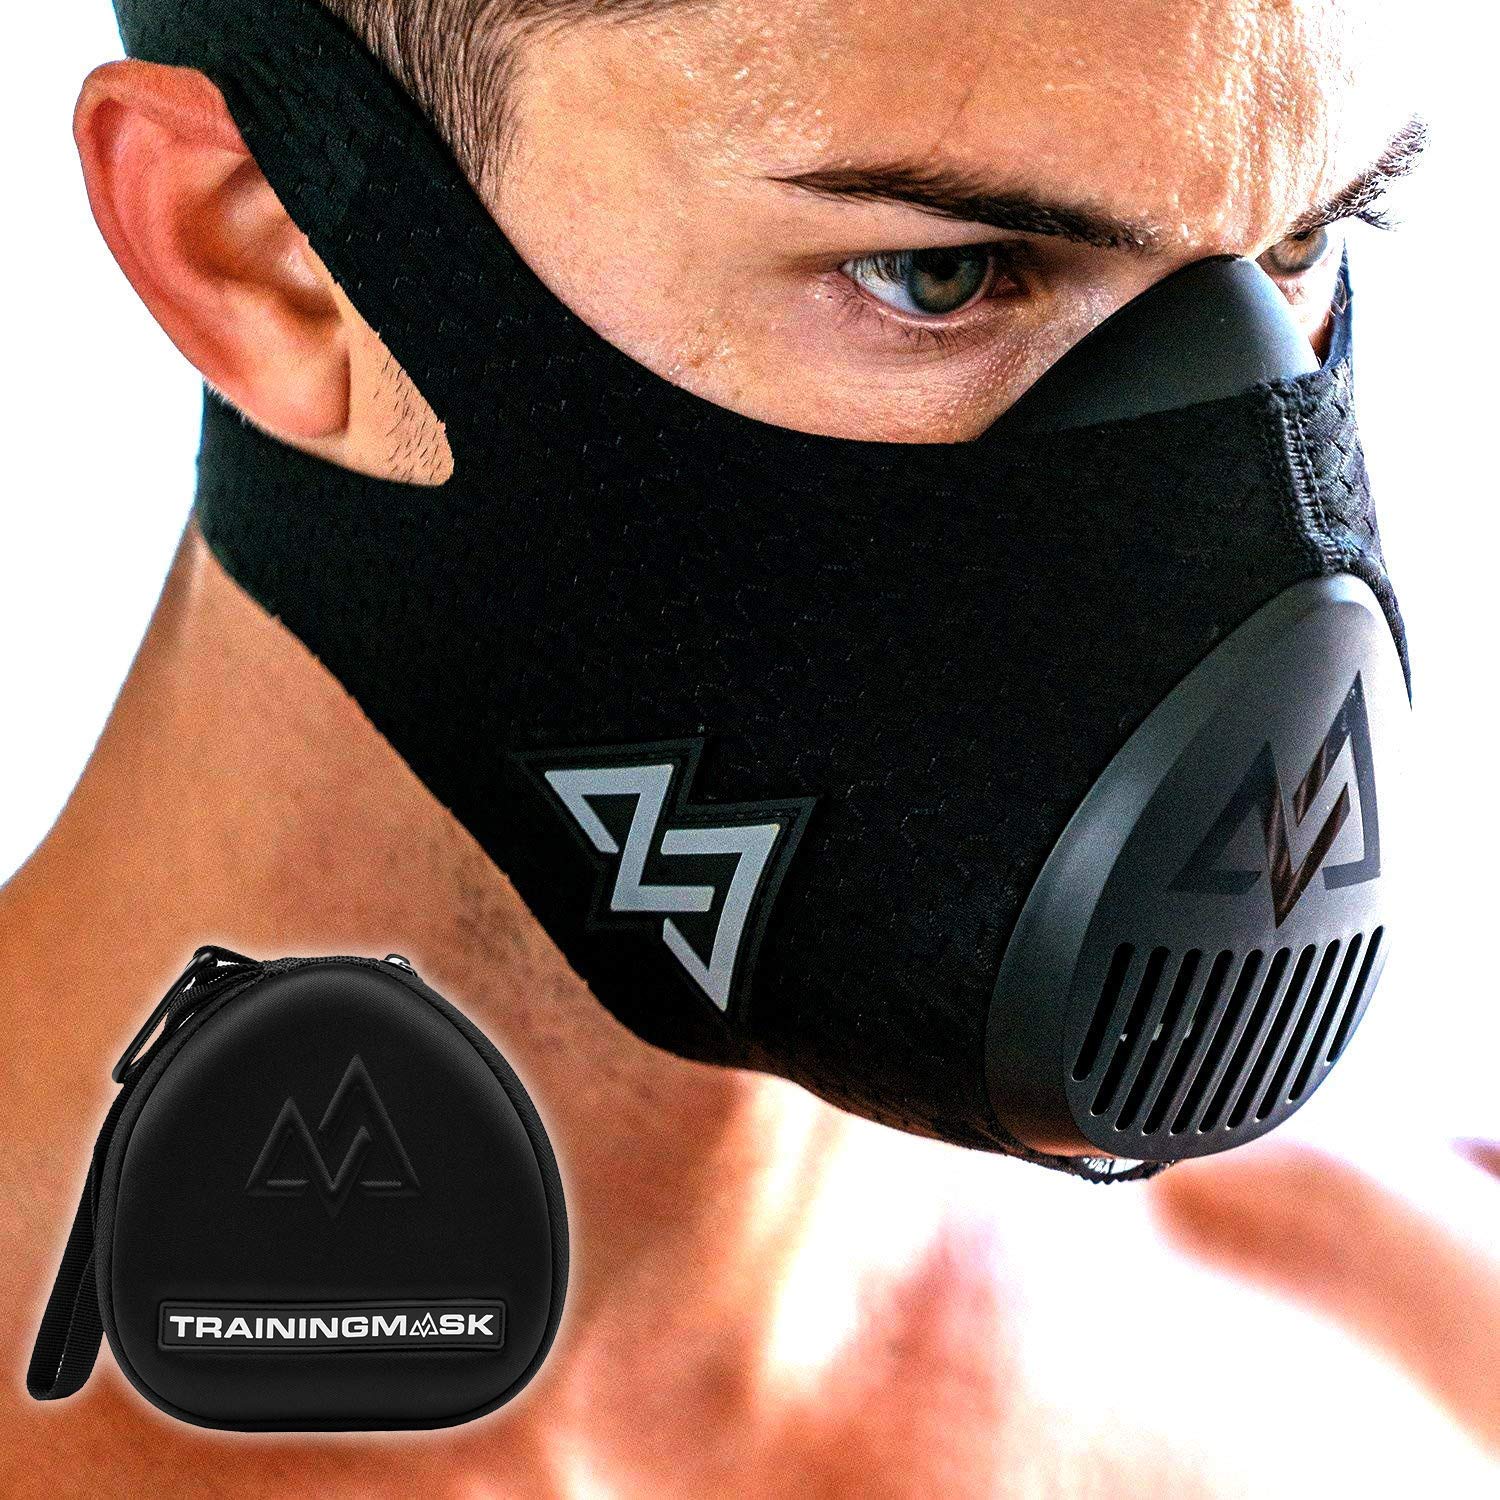 Training Mask 3.0 – Workout Elevation Performance Fitness Mask